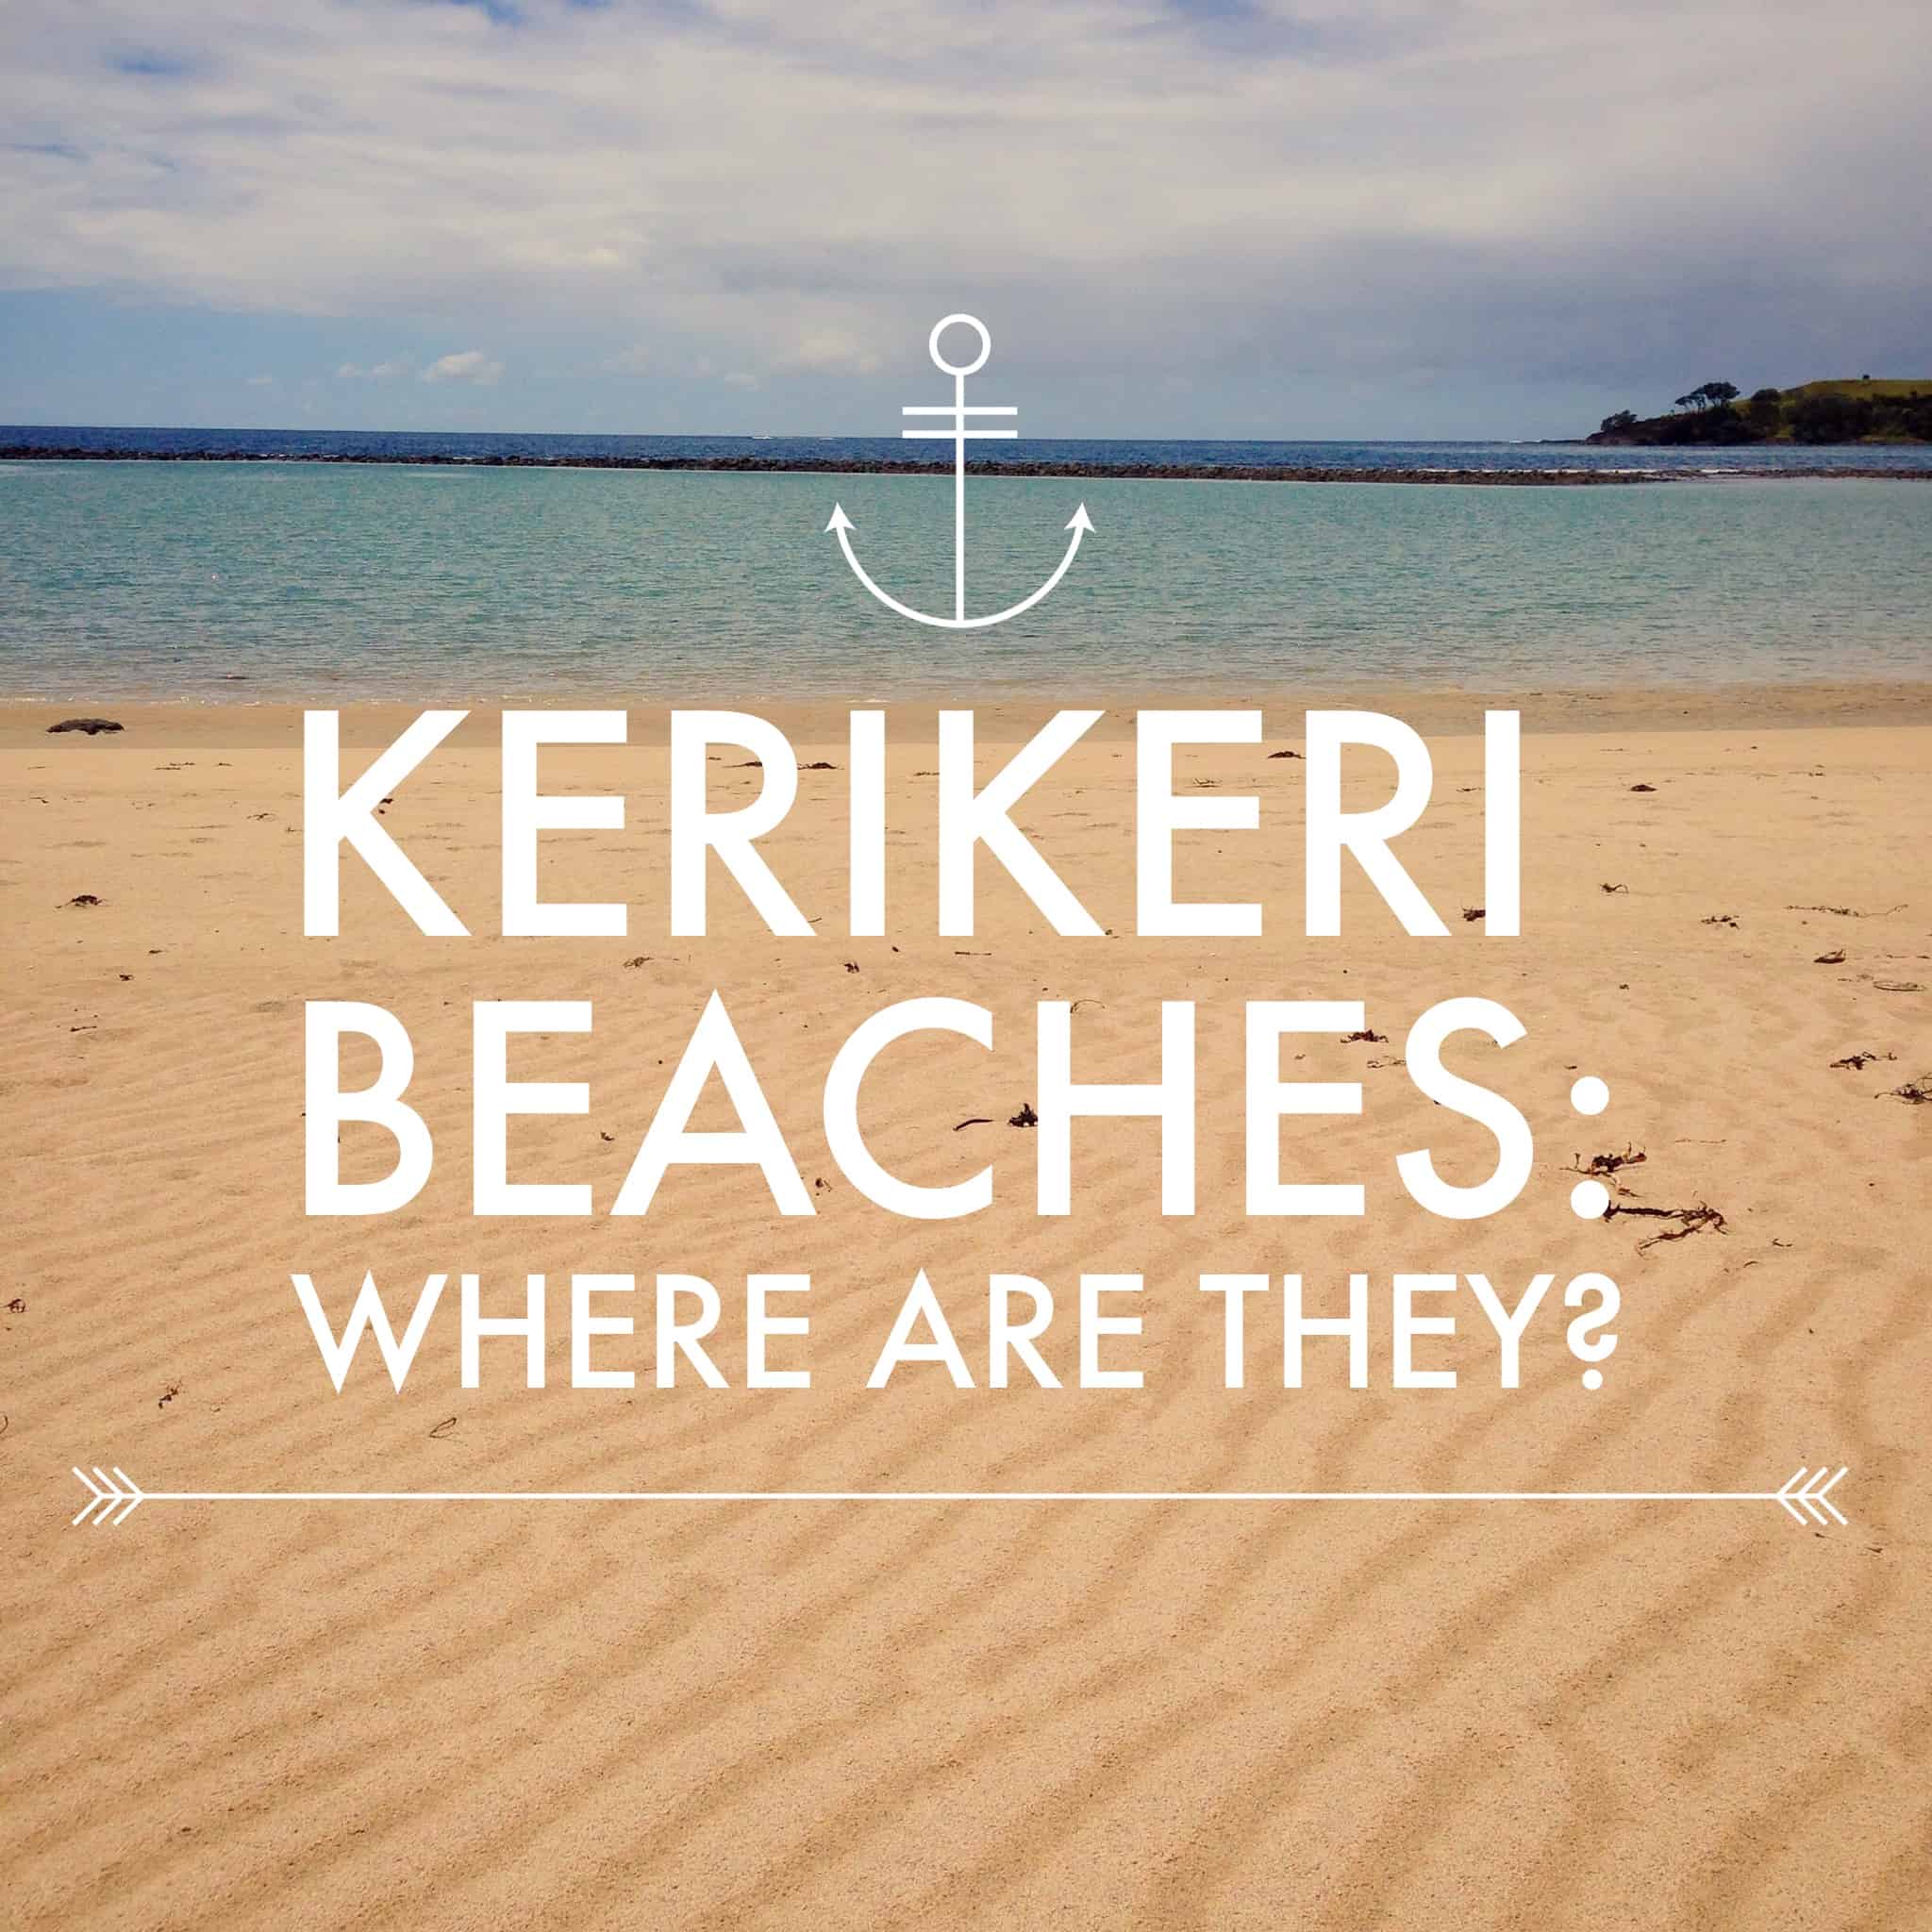 Kerikeri beaches: where are they?